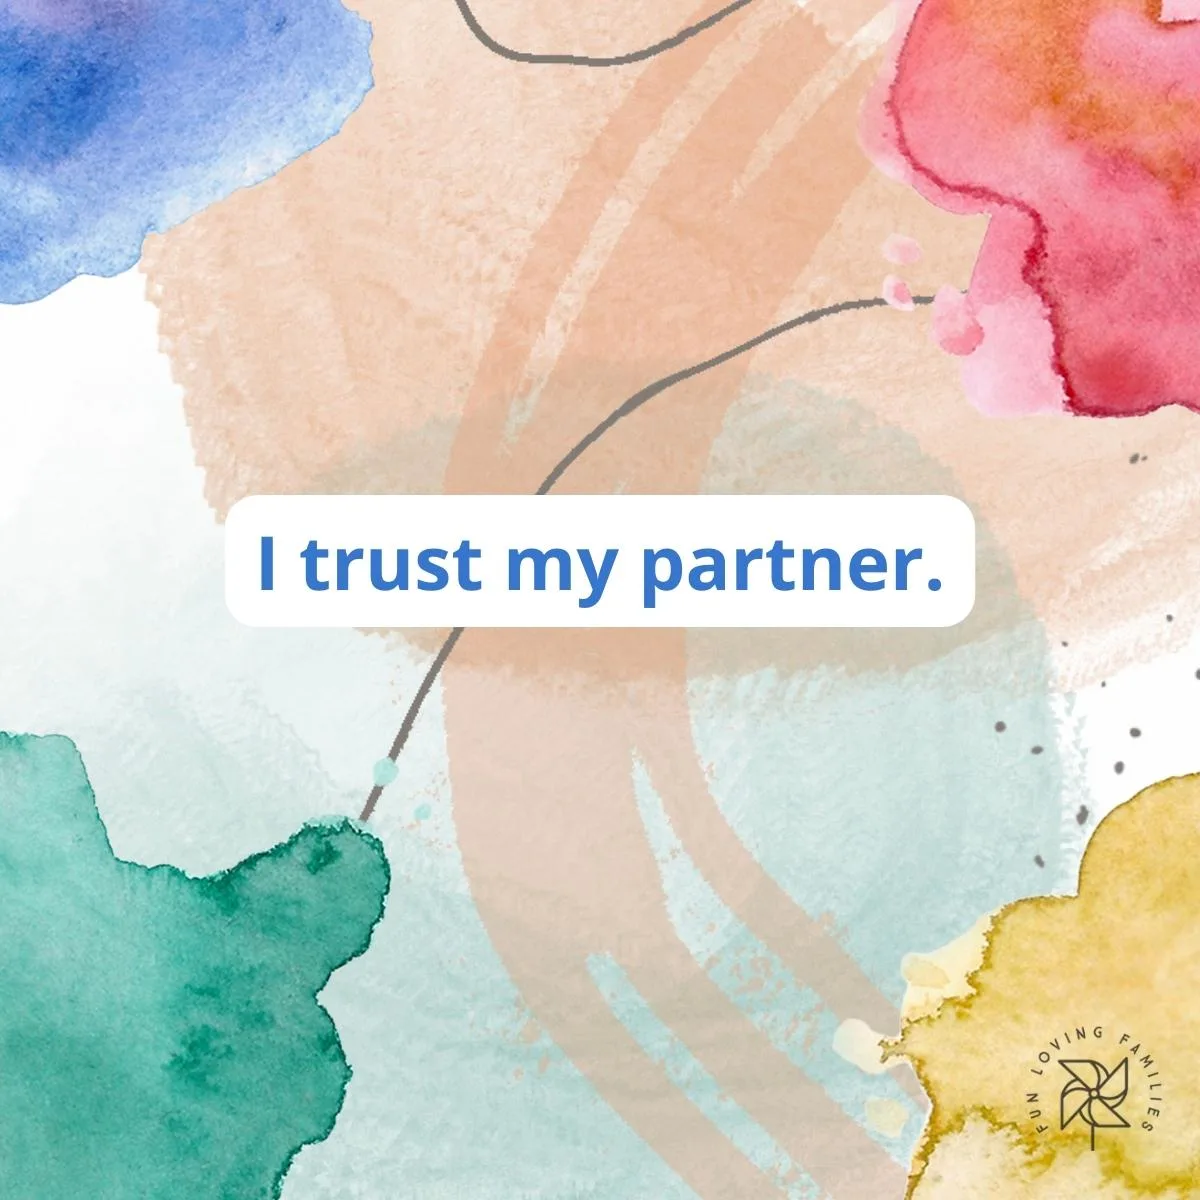 I trust my partner affirmation